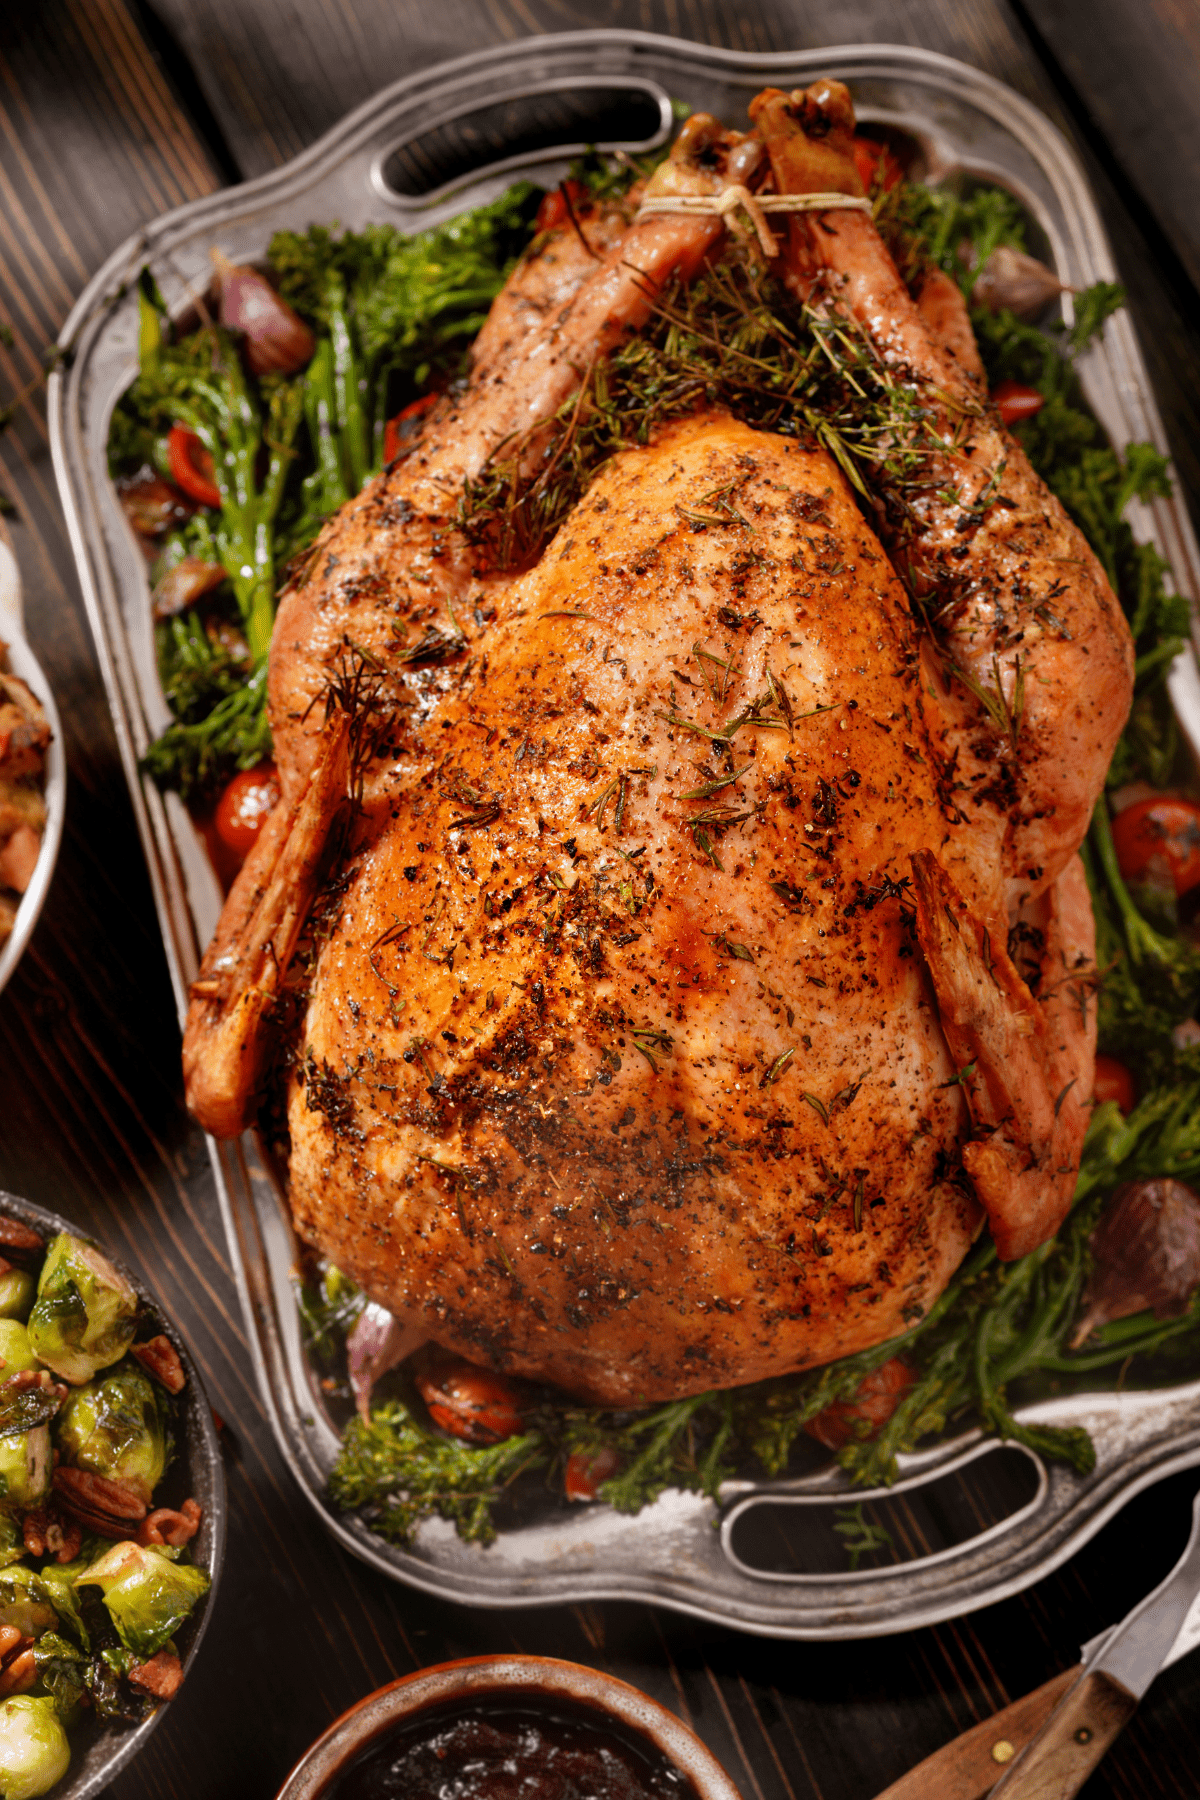 Turkey ready in a roasting pan.